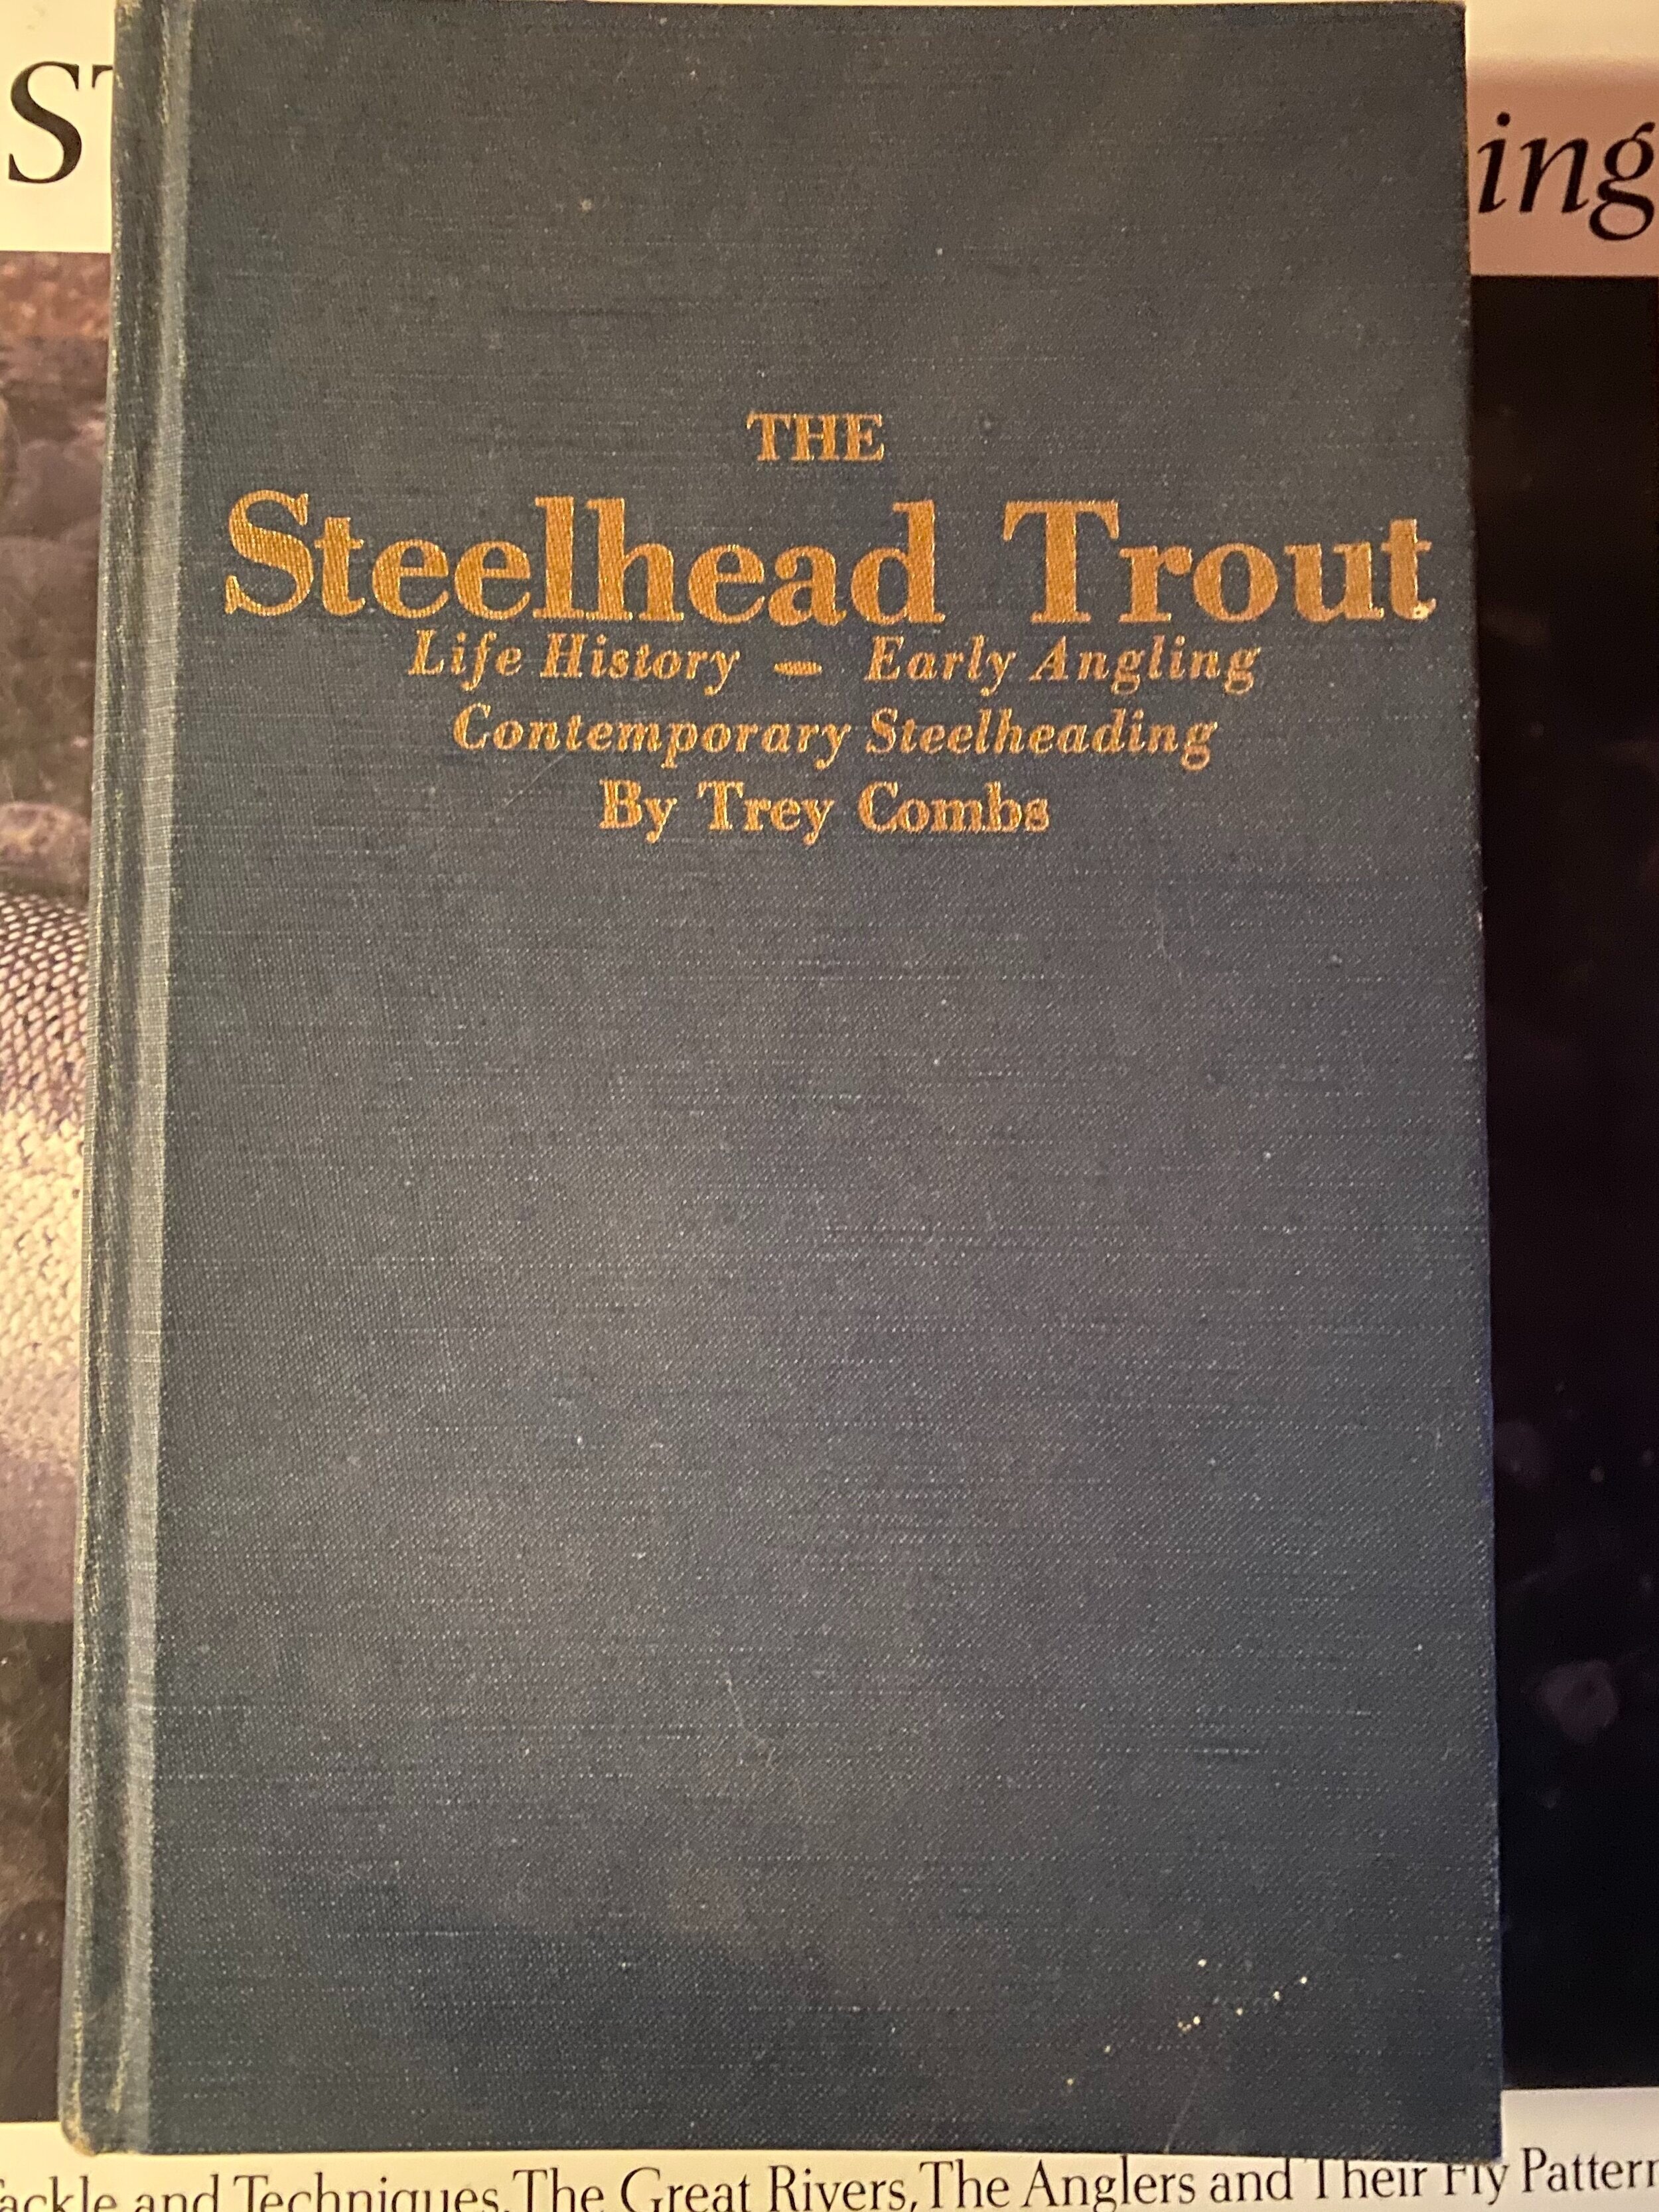 Steelhead Trout